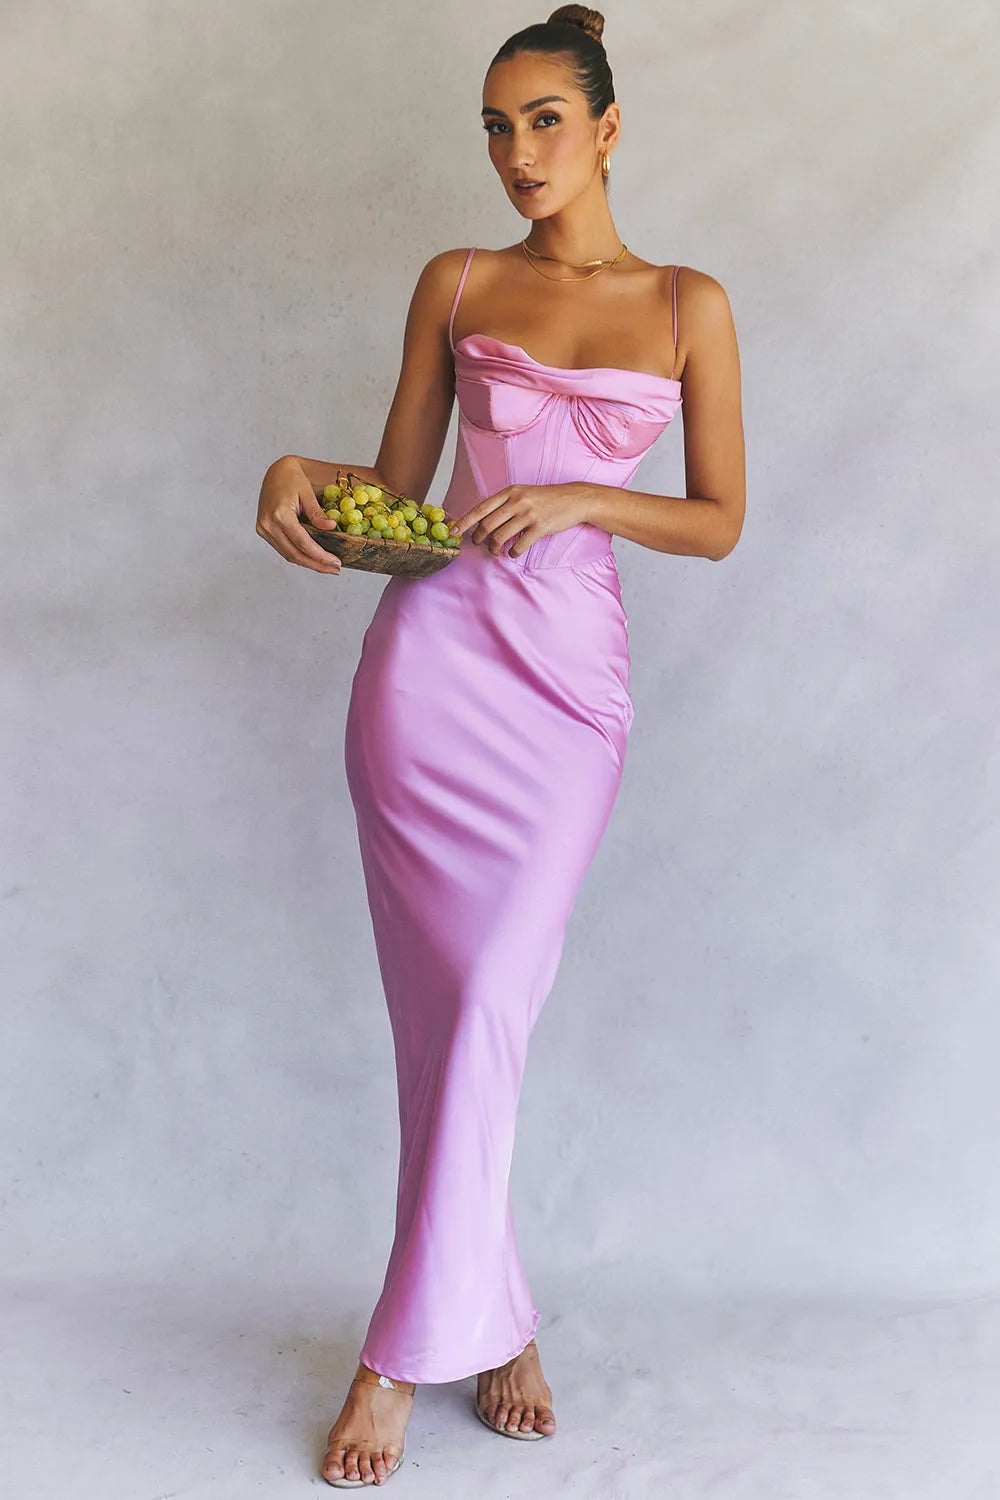 Sloane Corset Dress … Blonder Mercantile